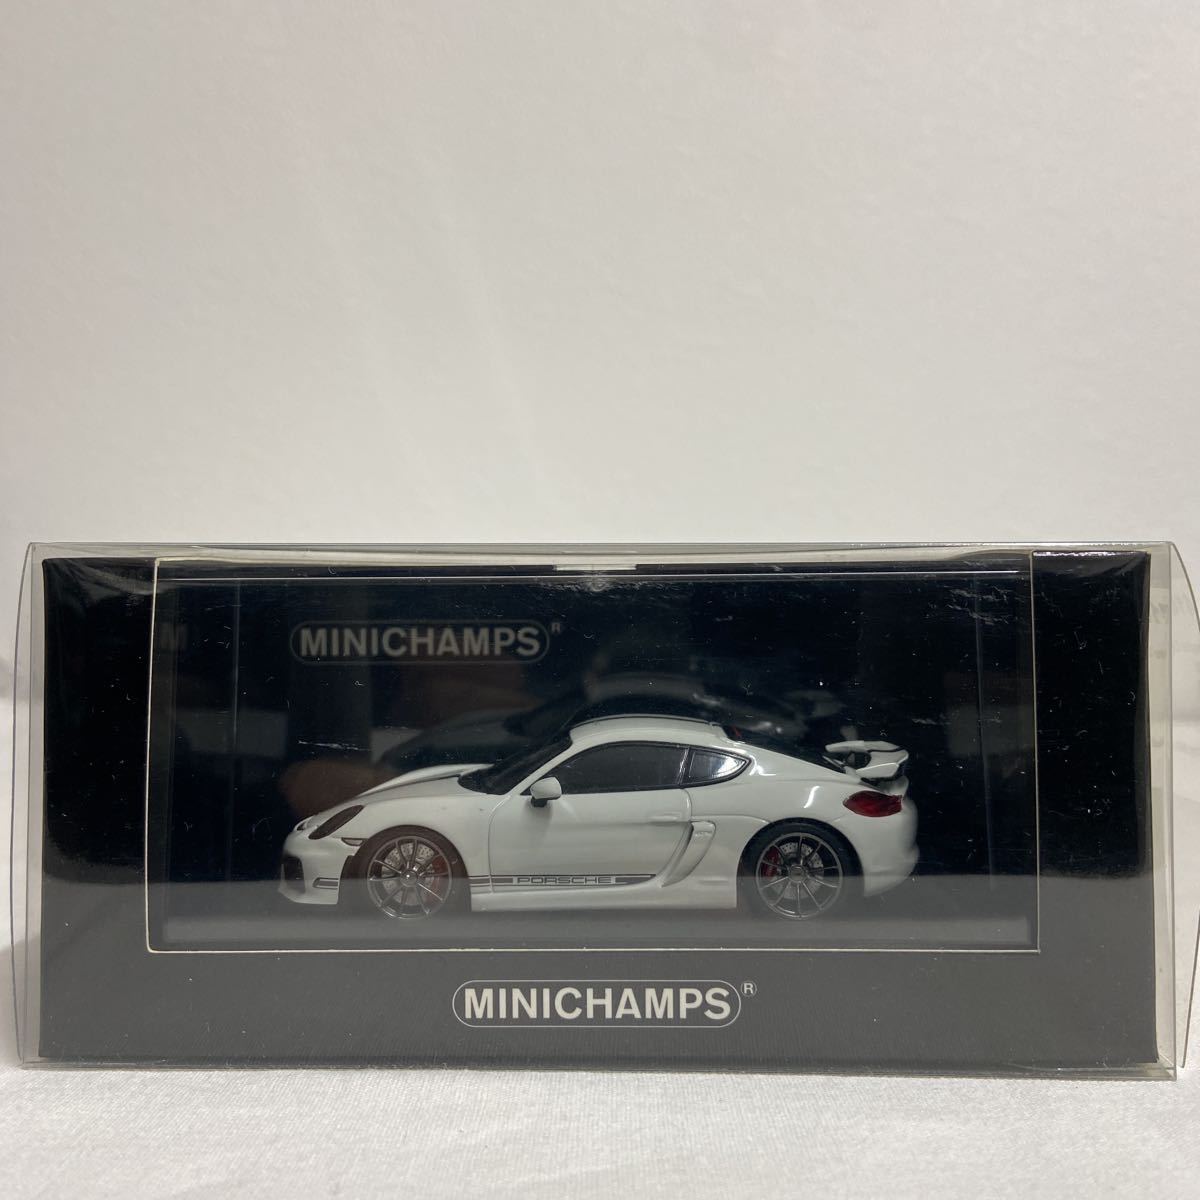 MINICHAMPS 1/43 PORSCHE CAYMAN GT4 White 2016 год Minichamps Cayman 981 type белый ограниченная модель миникар модель машина 